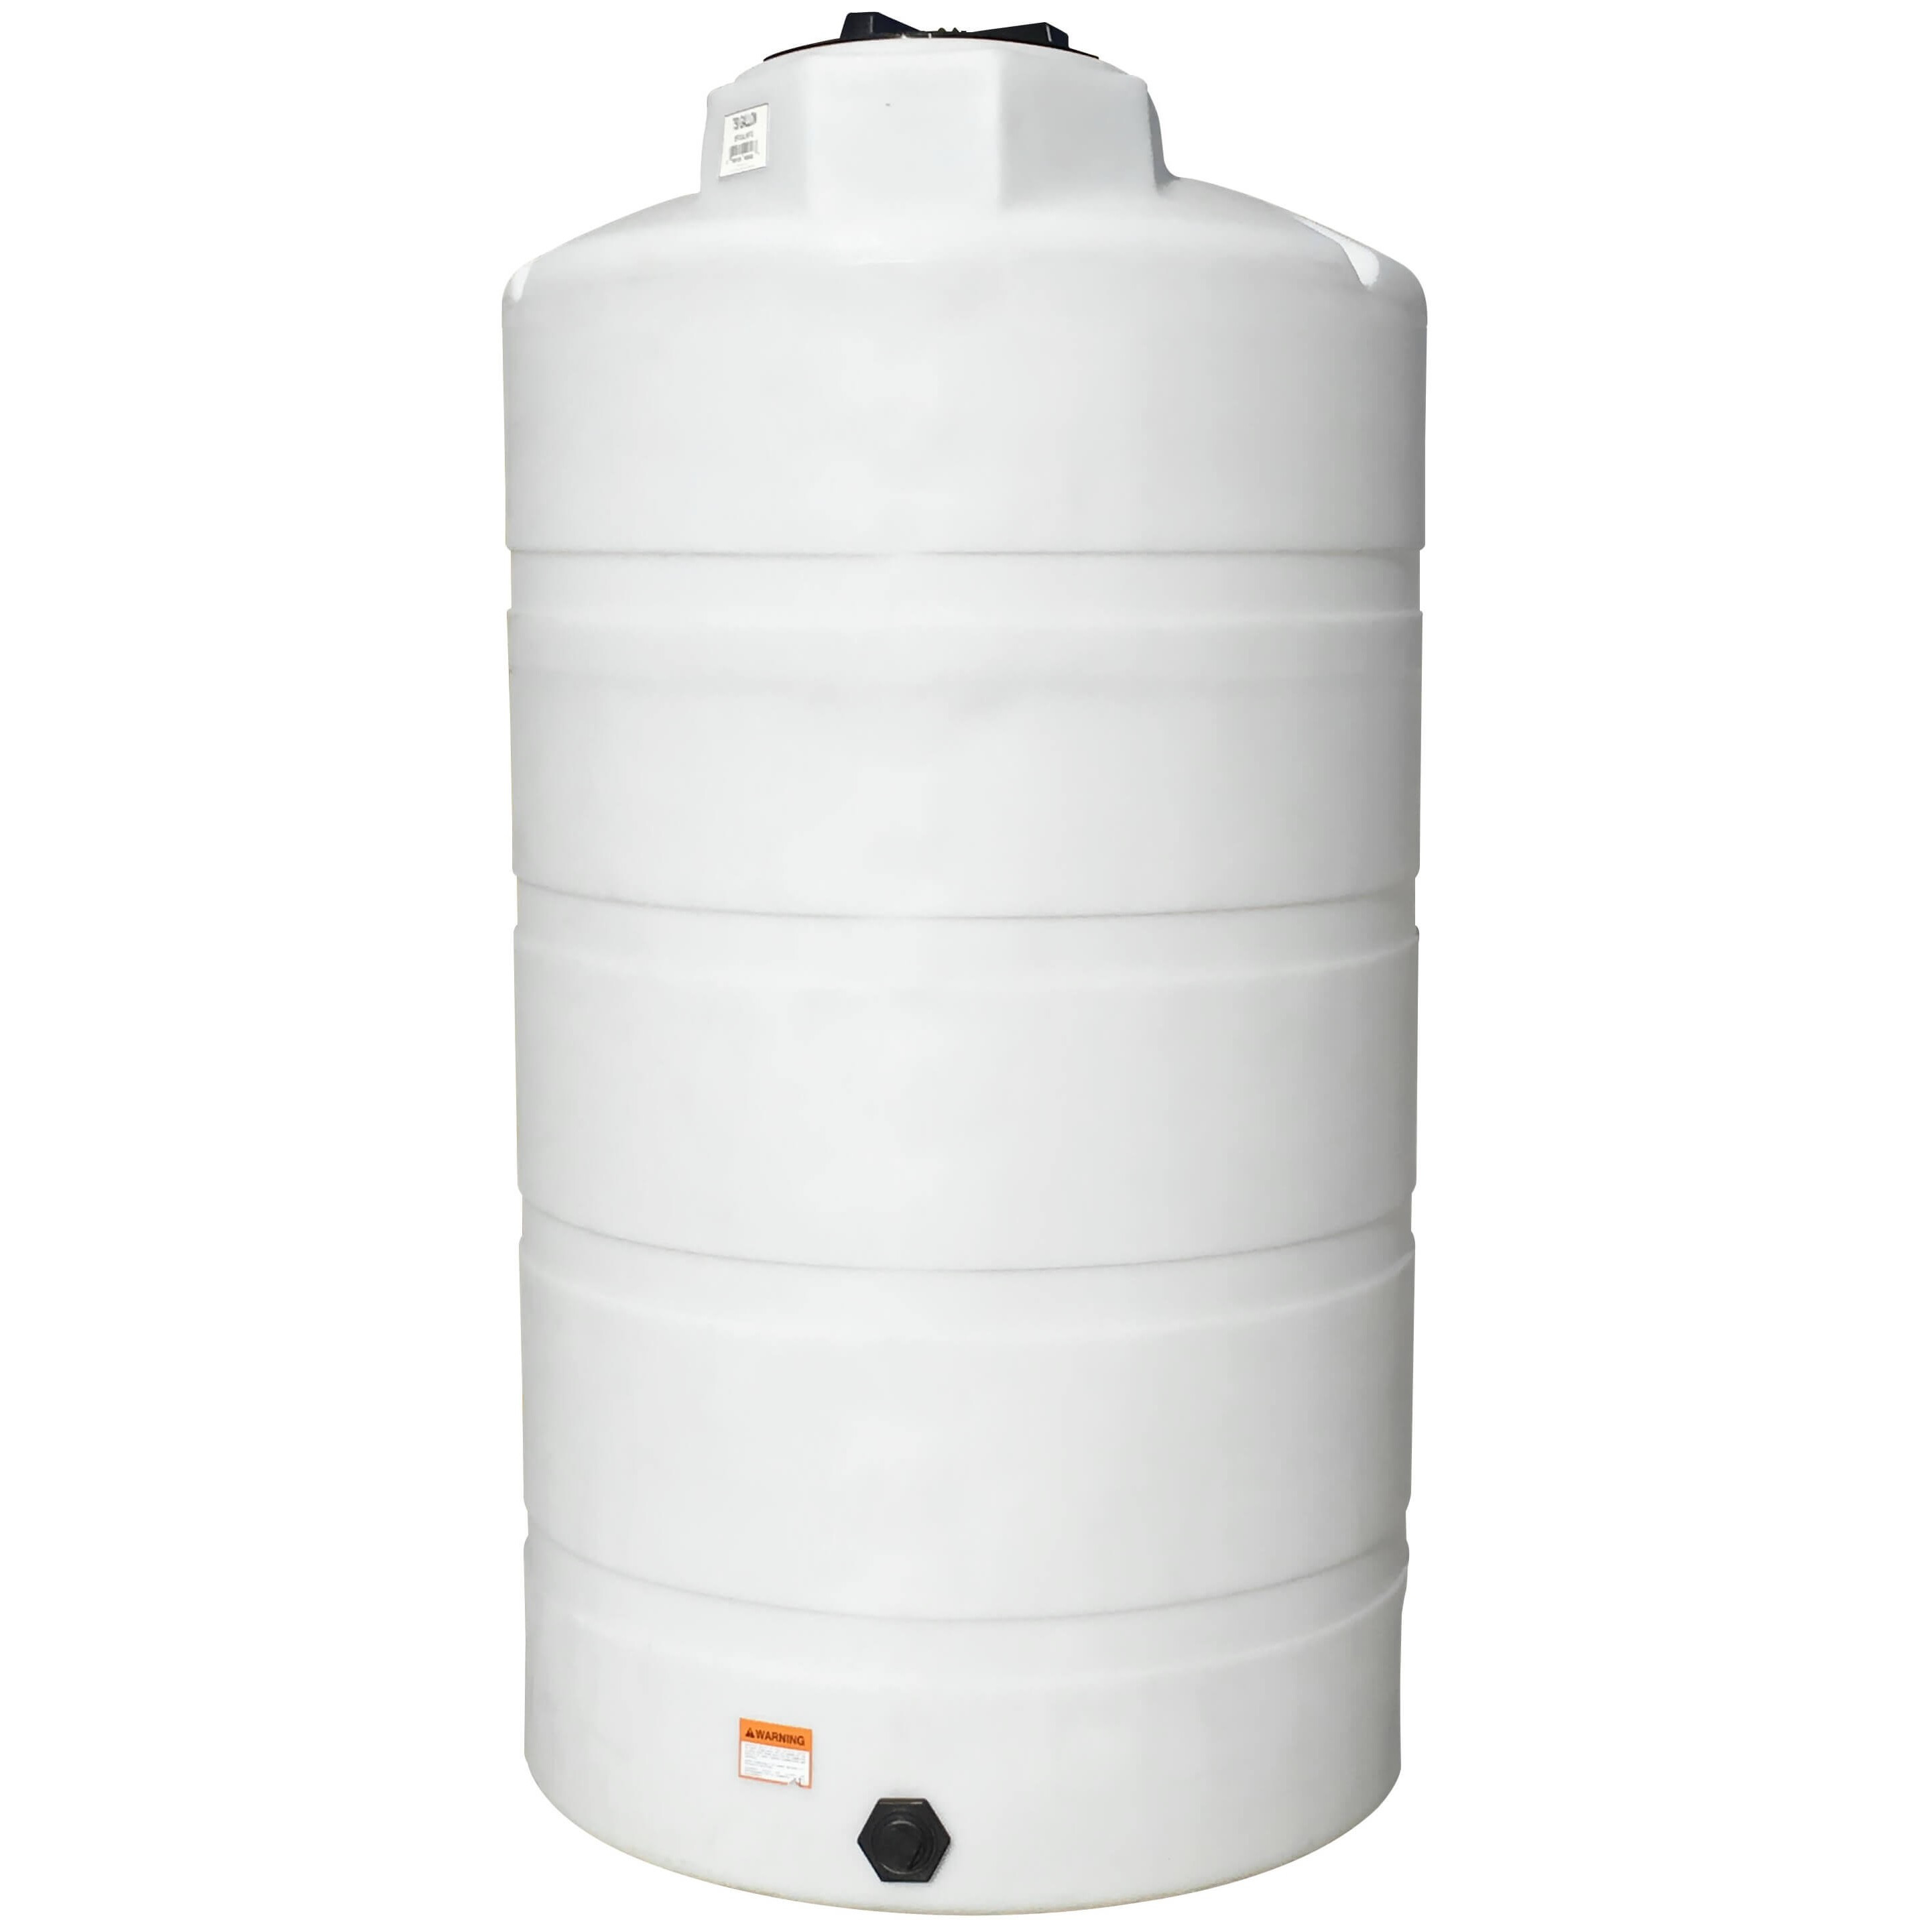 Best ideas about Vertical Storage Tanks
. Save or Pin 5500 Gallon White Vertical Storage Tank Now.